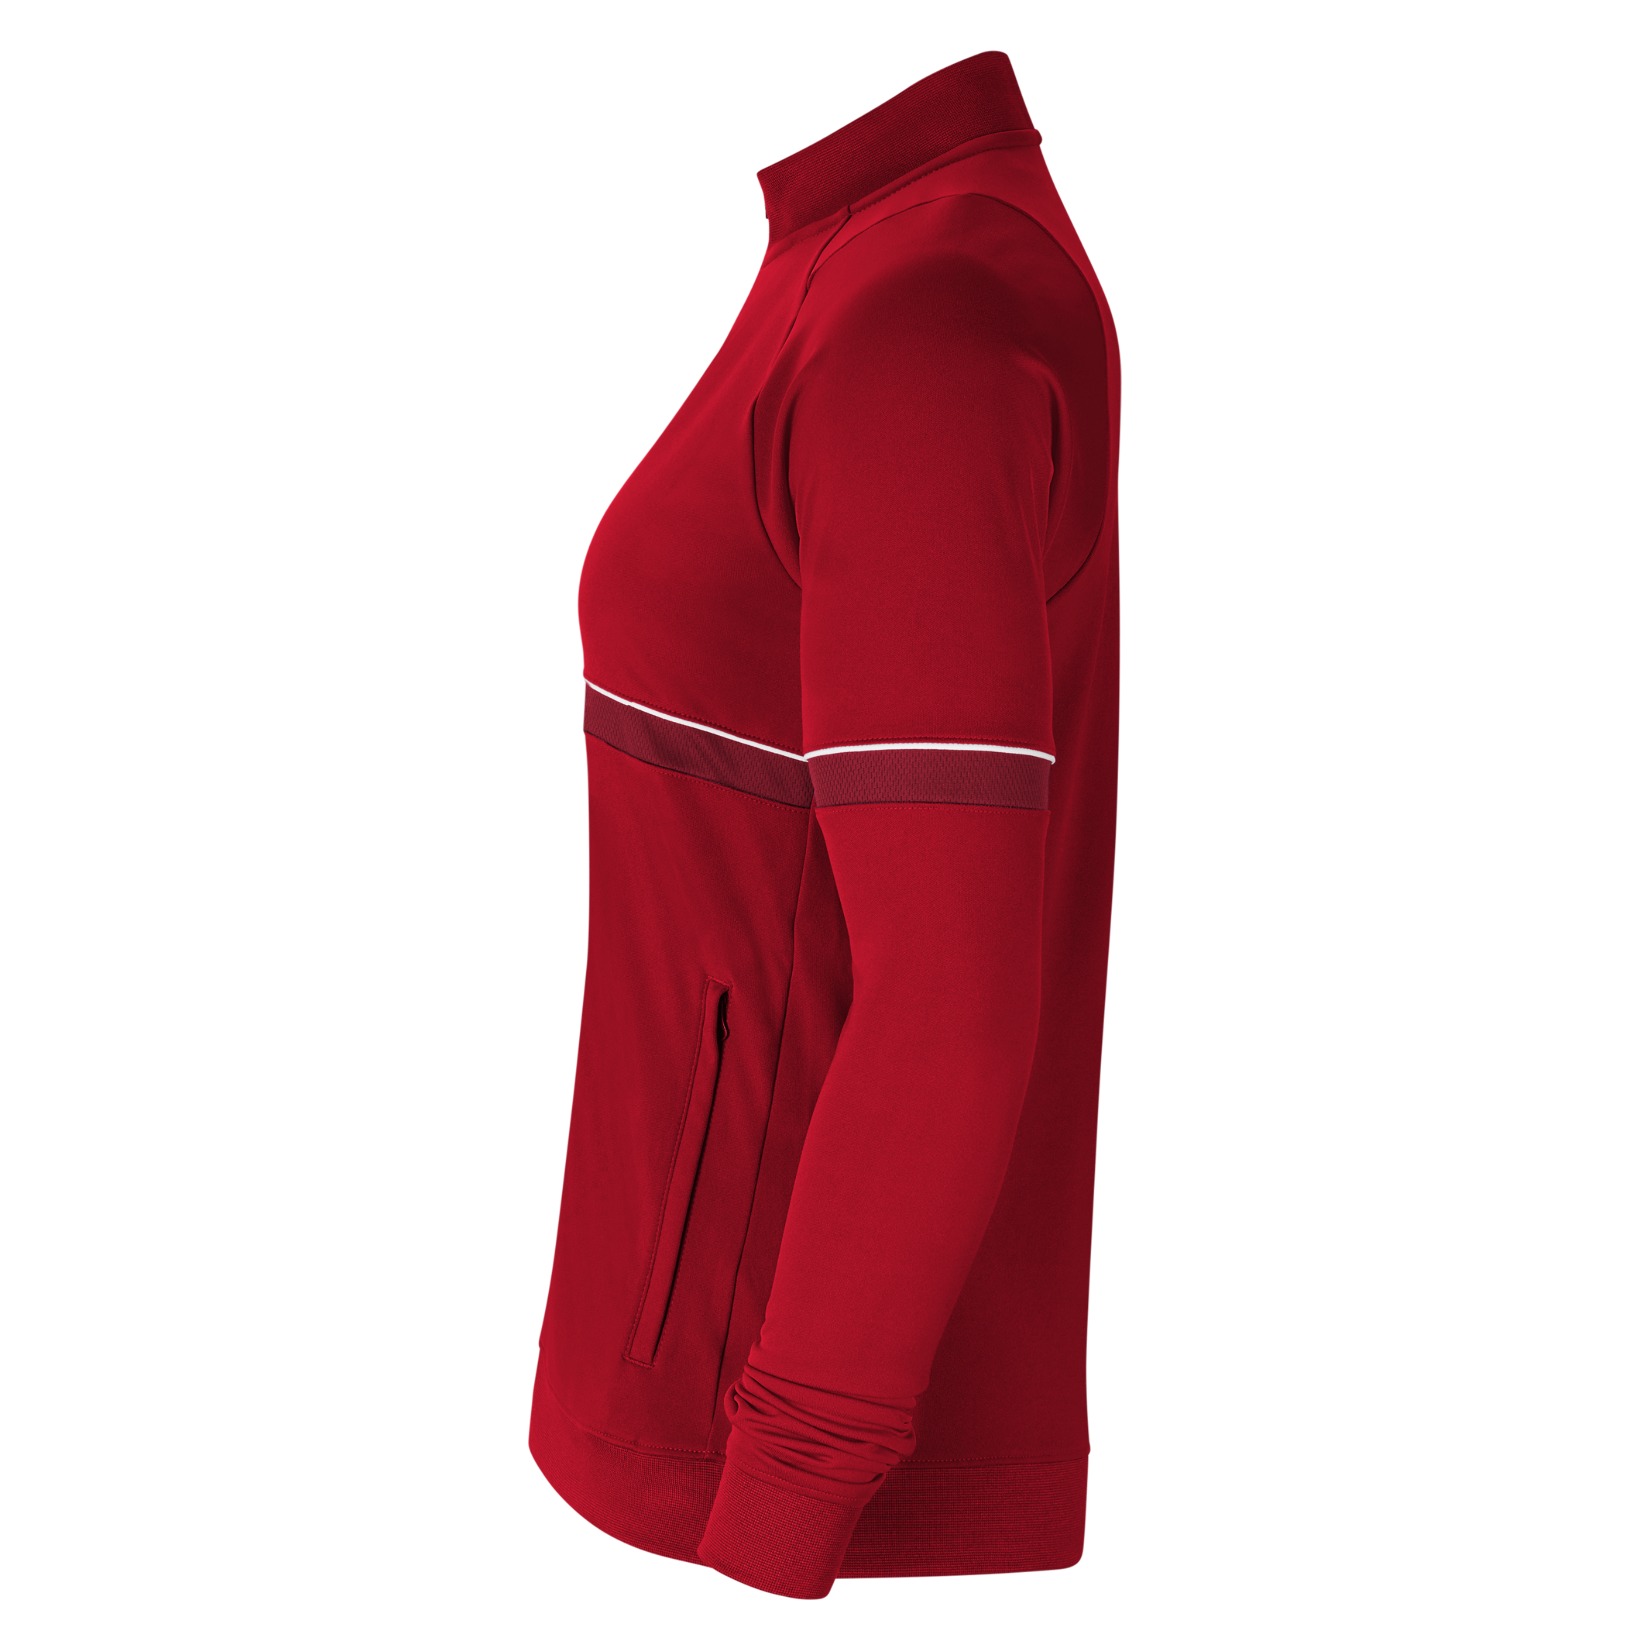 Nike Womens Academy 21 Knit Track Jacket (W) University Red-White-Gym Red-White